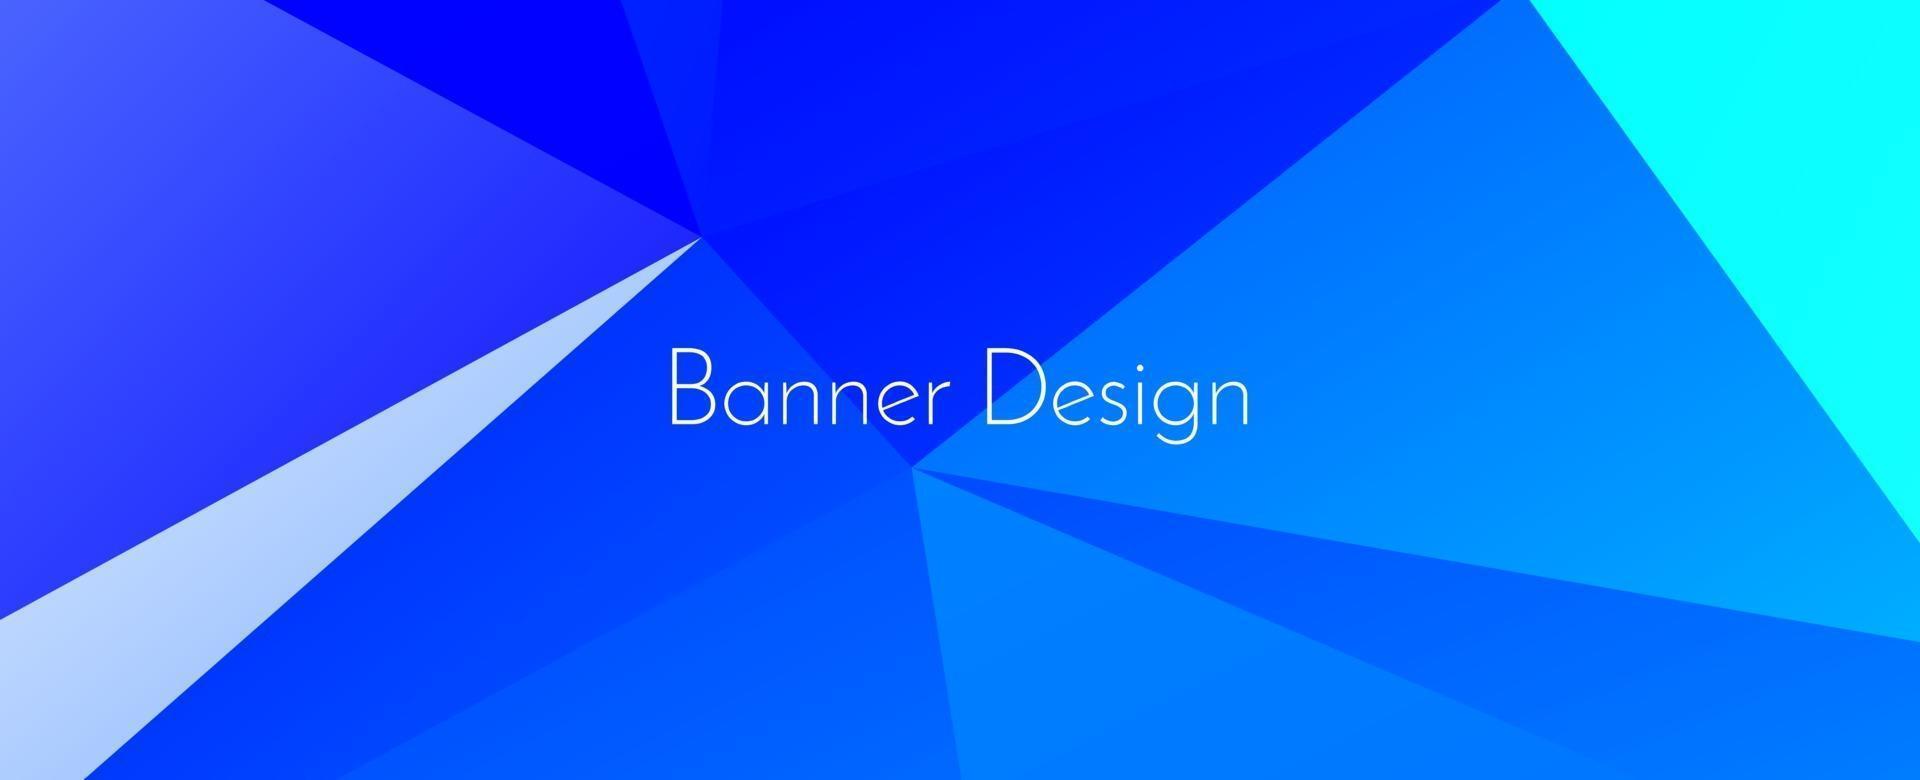 Abstract elegant geometric decorative design banner background vector